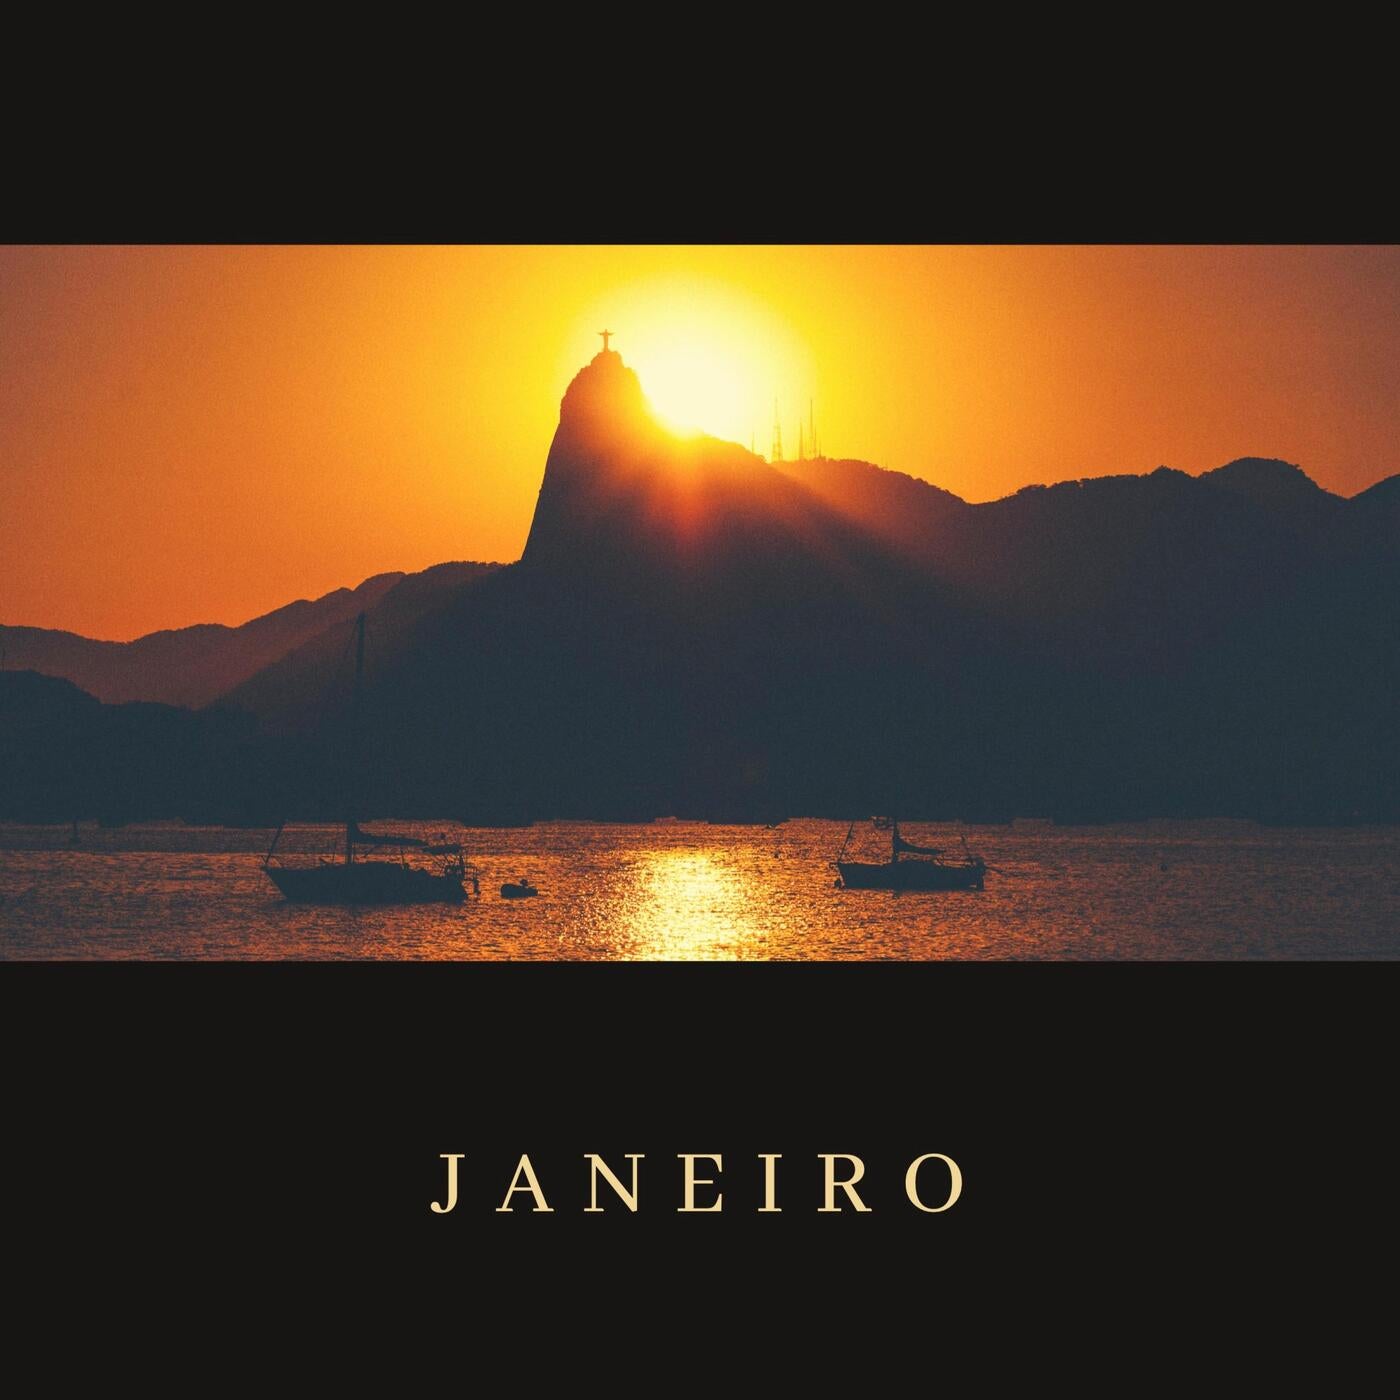 Janeiro